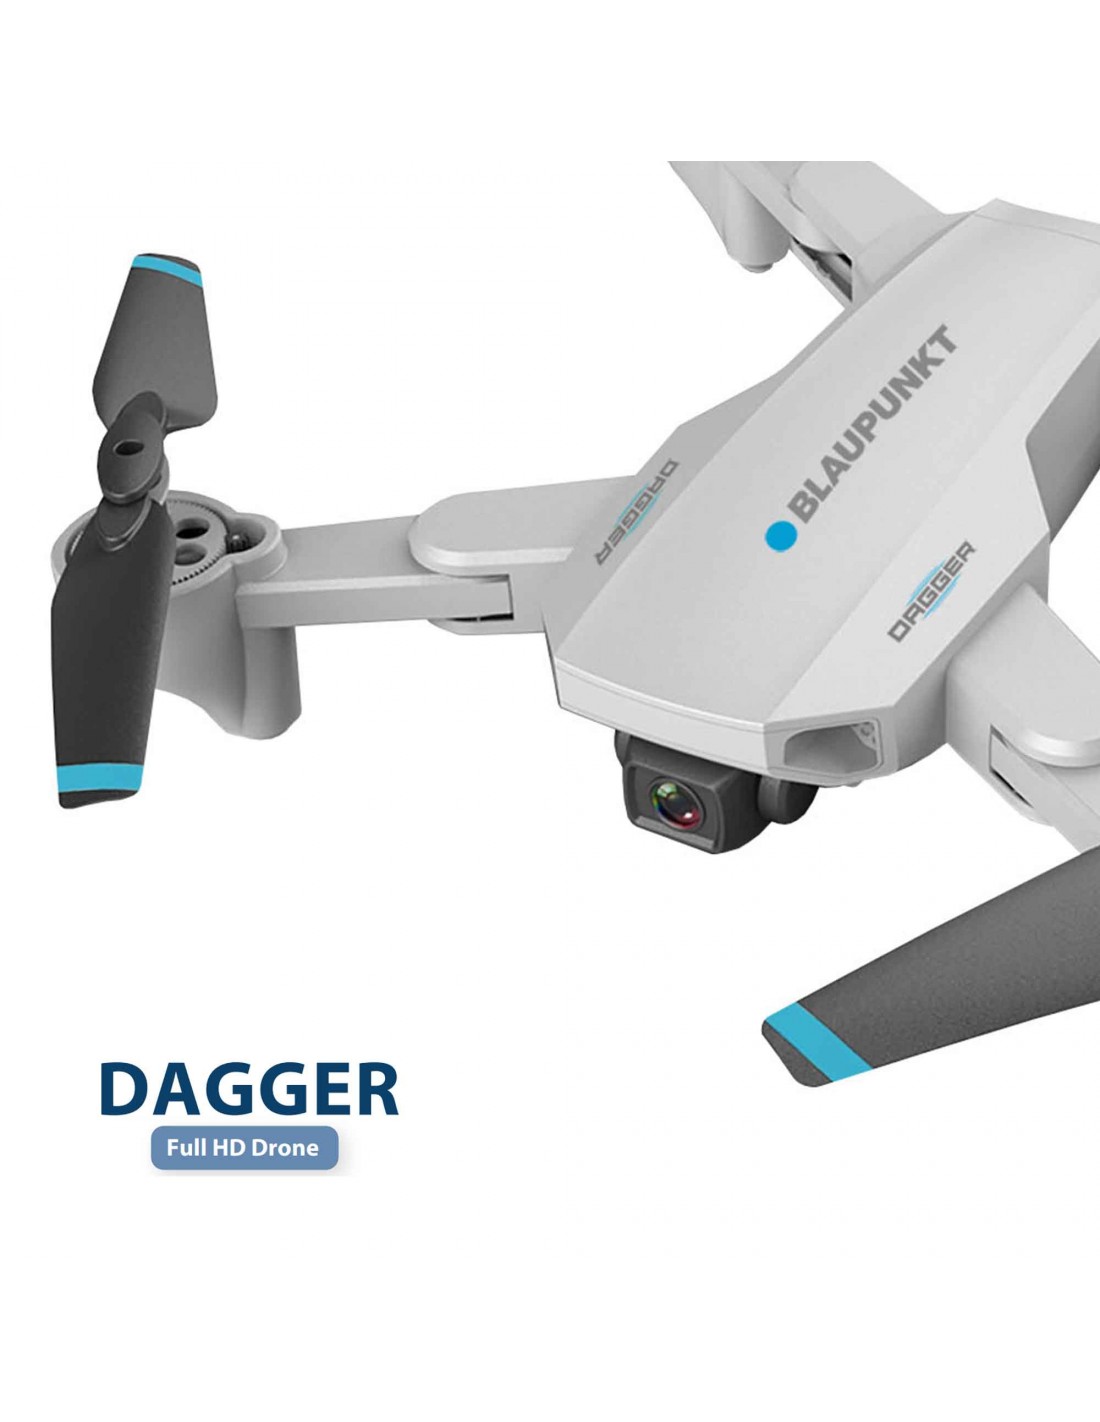 Drone Blaupunkt Dagger Camara FullHD